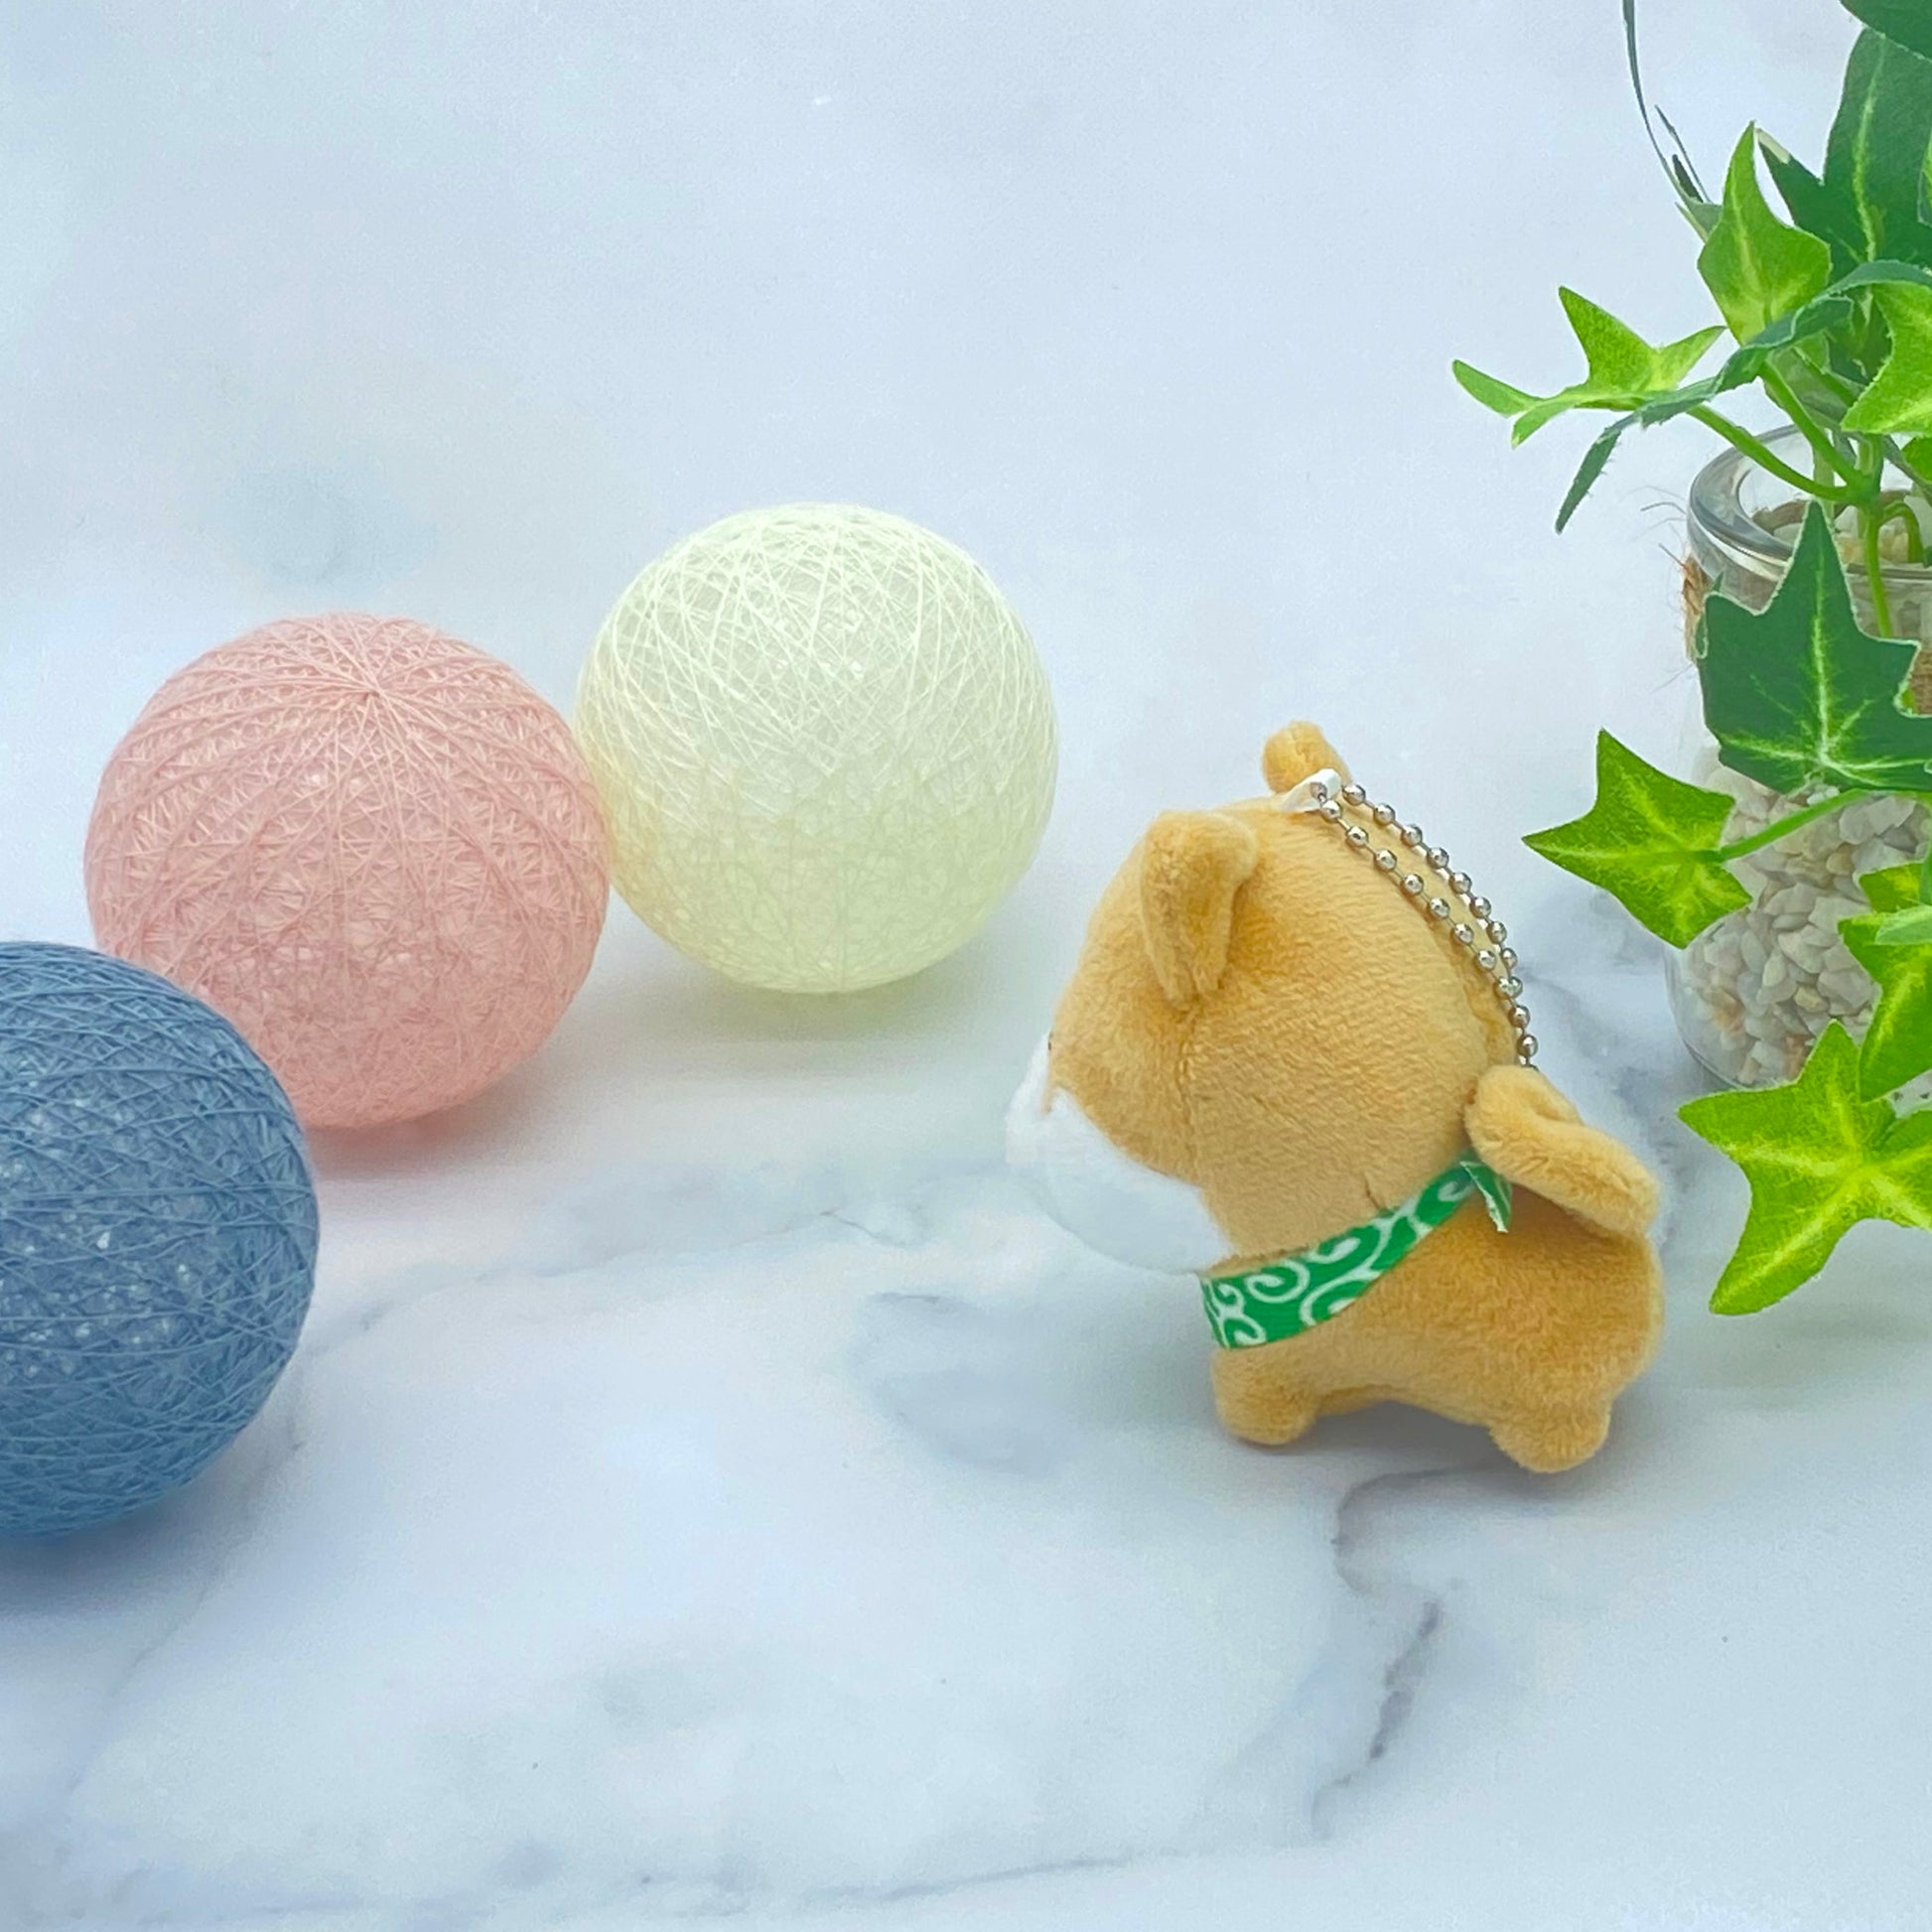 Shiba Inu Dog Keychain Cute Stuffed Animal Toy Mameshiba – e